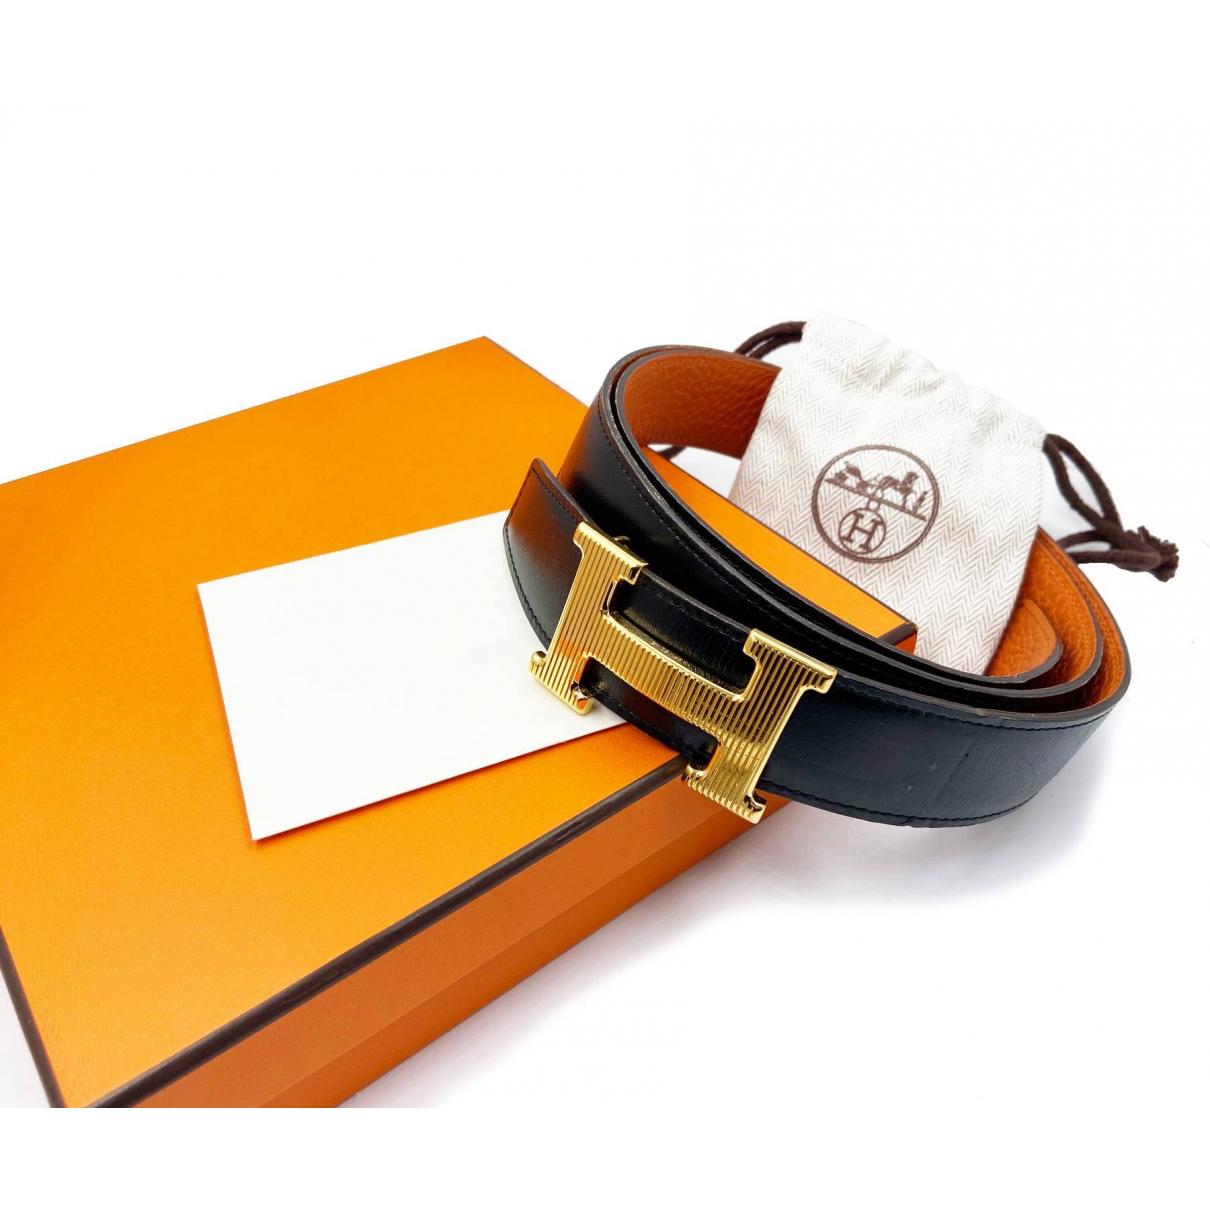 Hermès Gürtel aus Leder - Orange - Größe 90 - 20103865